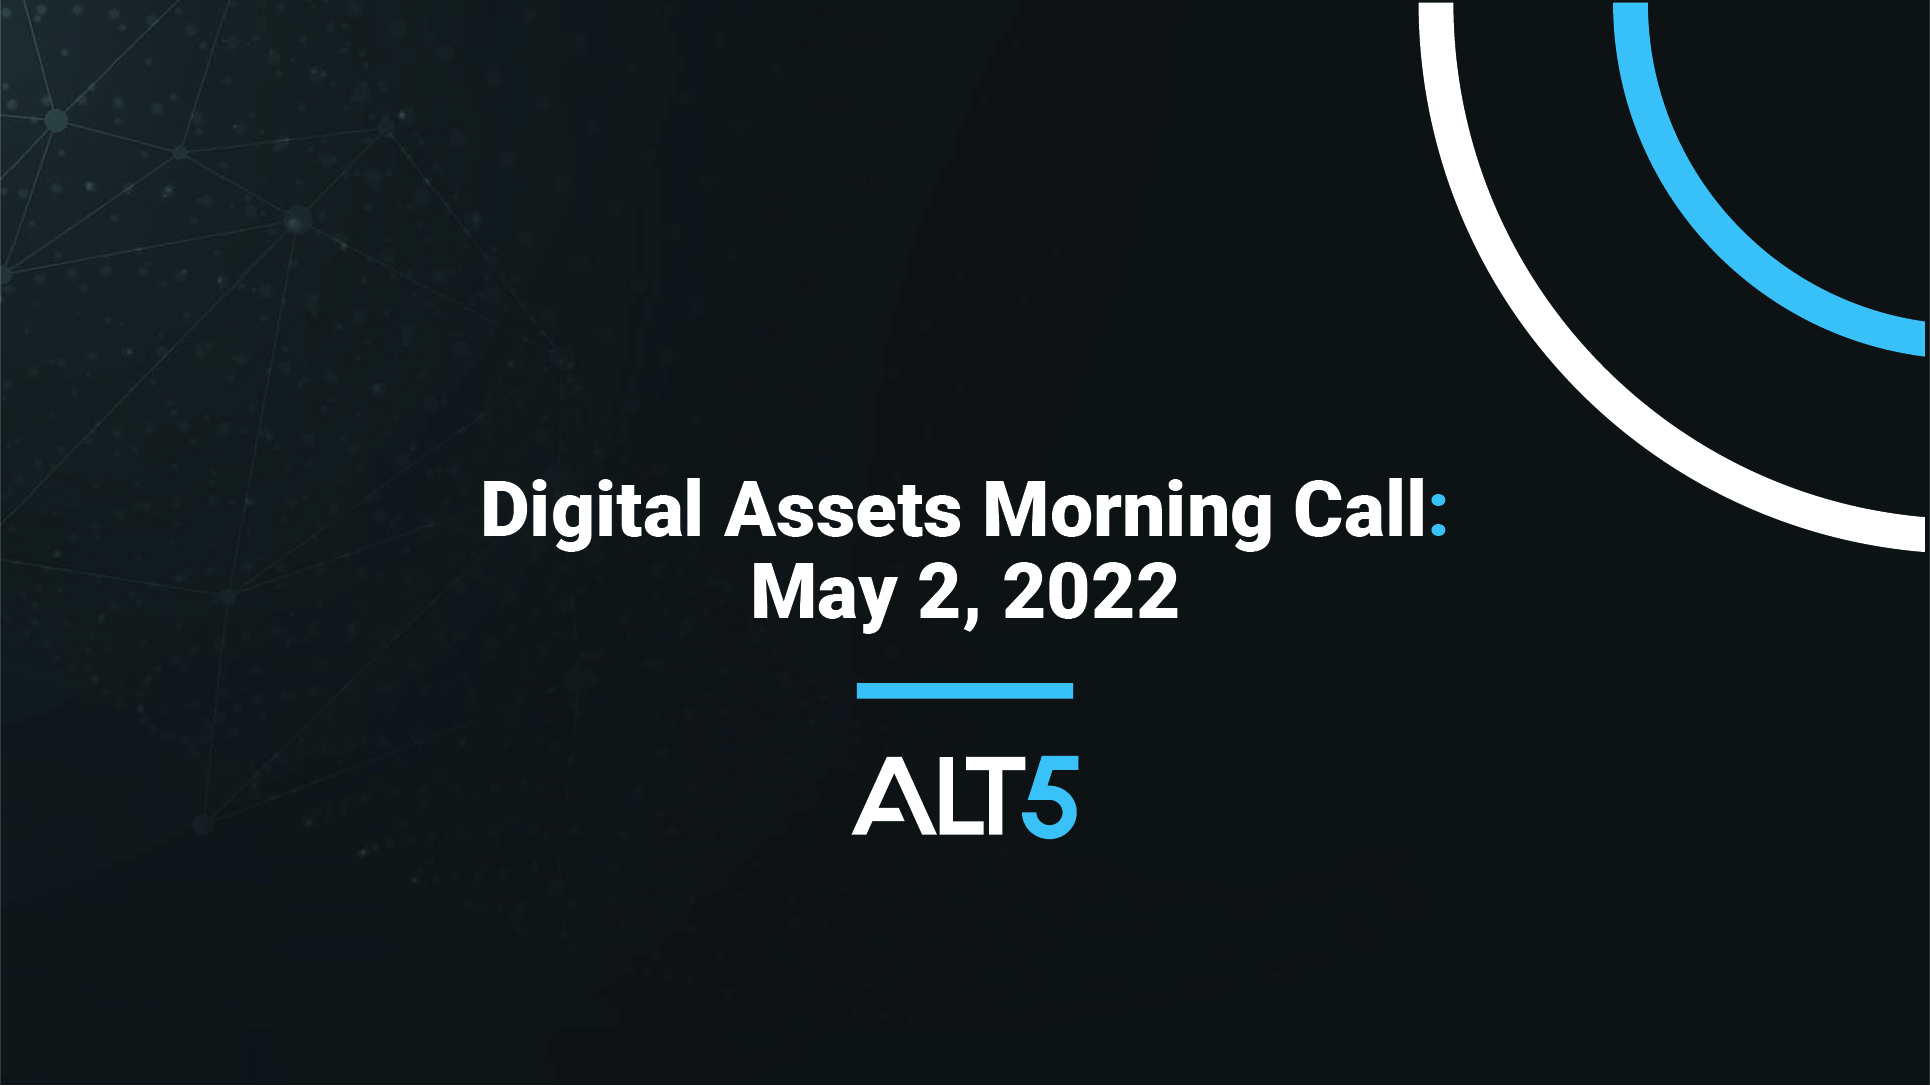 Digital Assets Morning Call: May 2 2022 - Macro turn keeps pressure on crypto assets